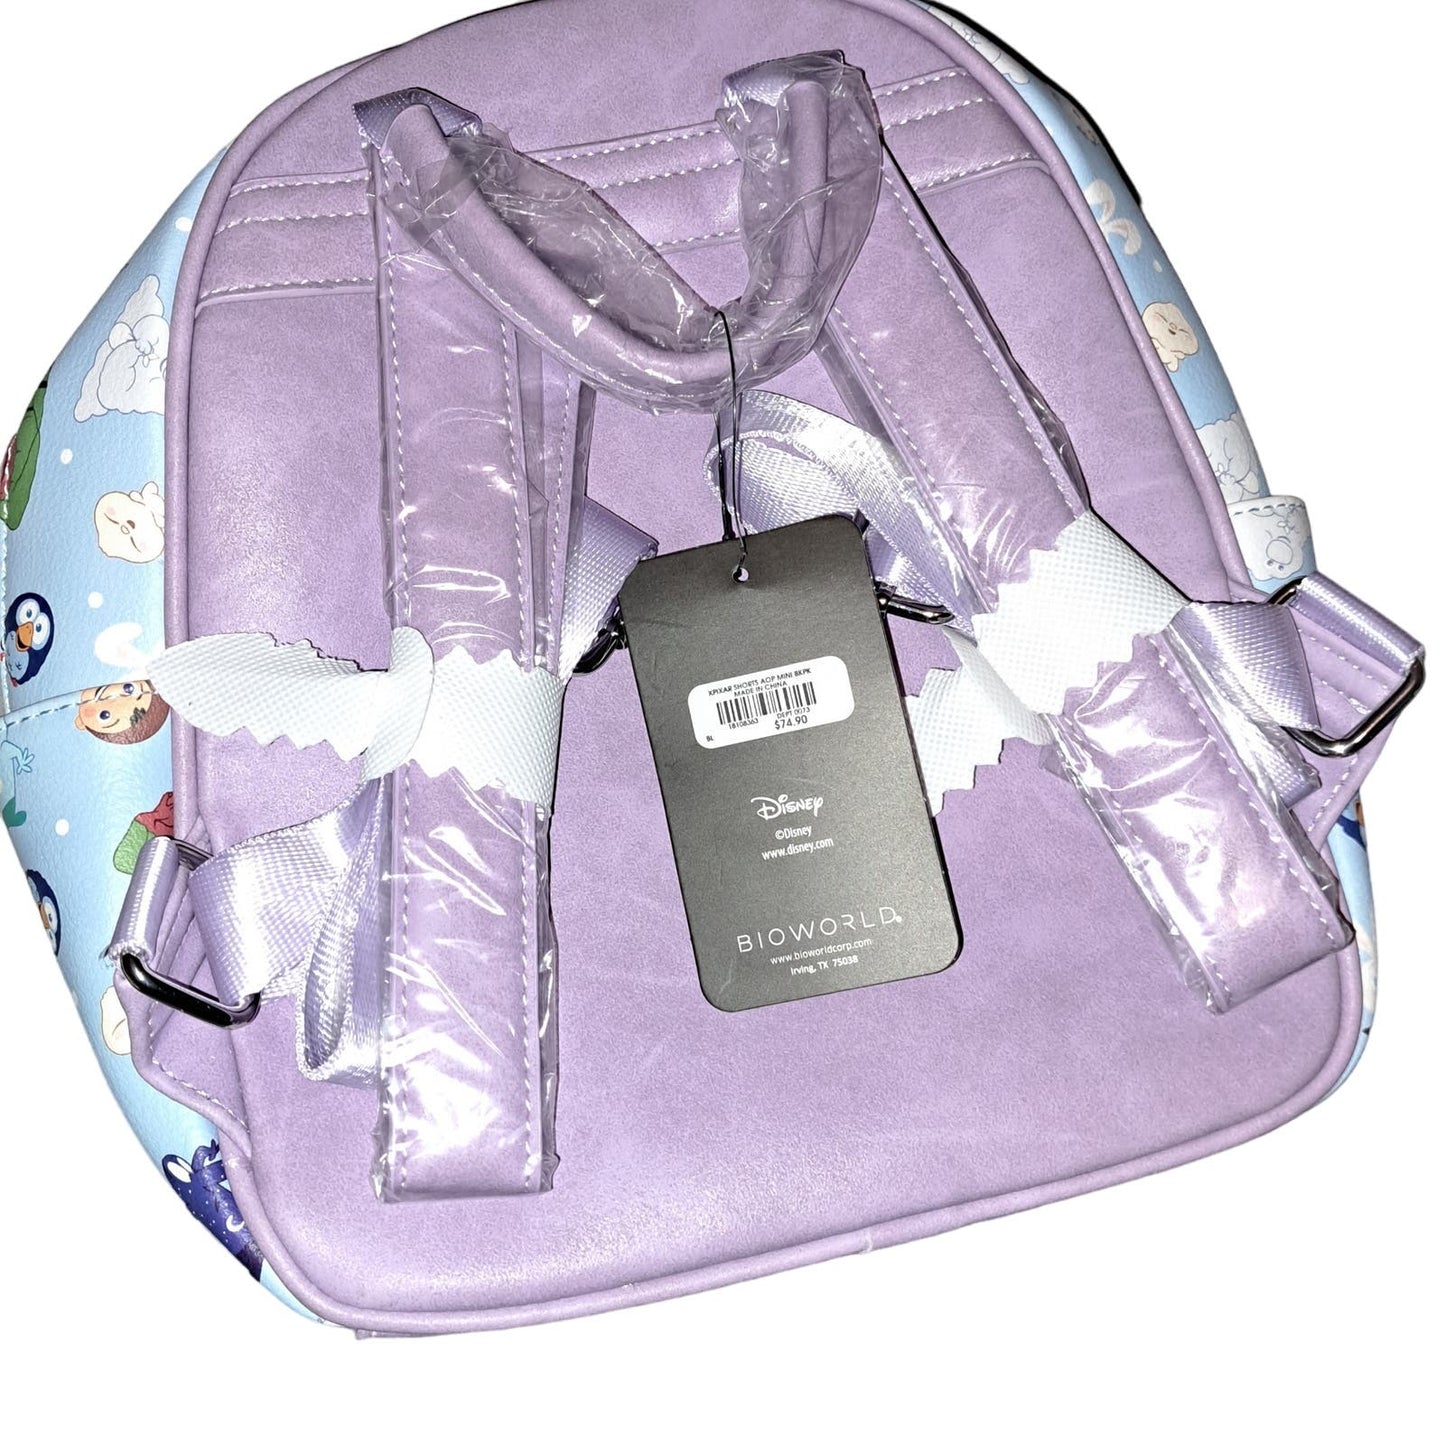 SALE!!! NEW PIXAR Mini Backpack